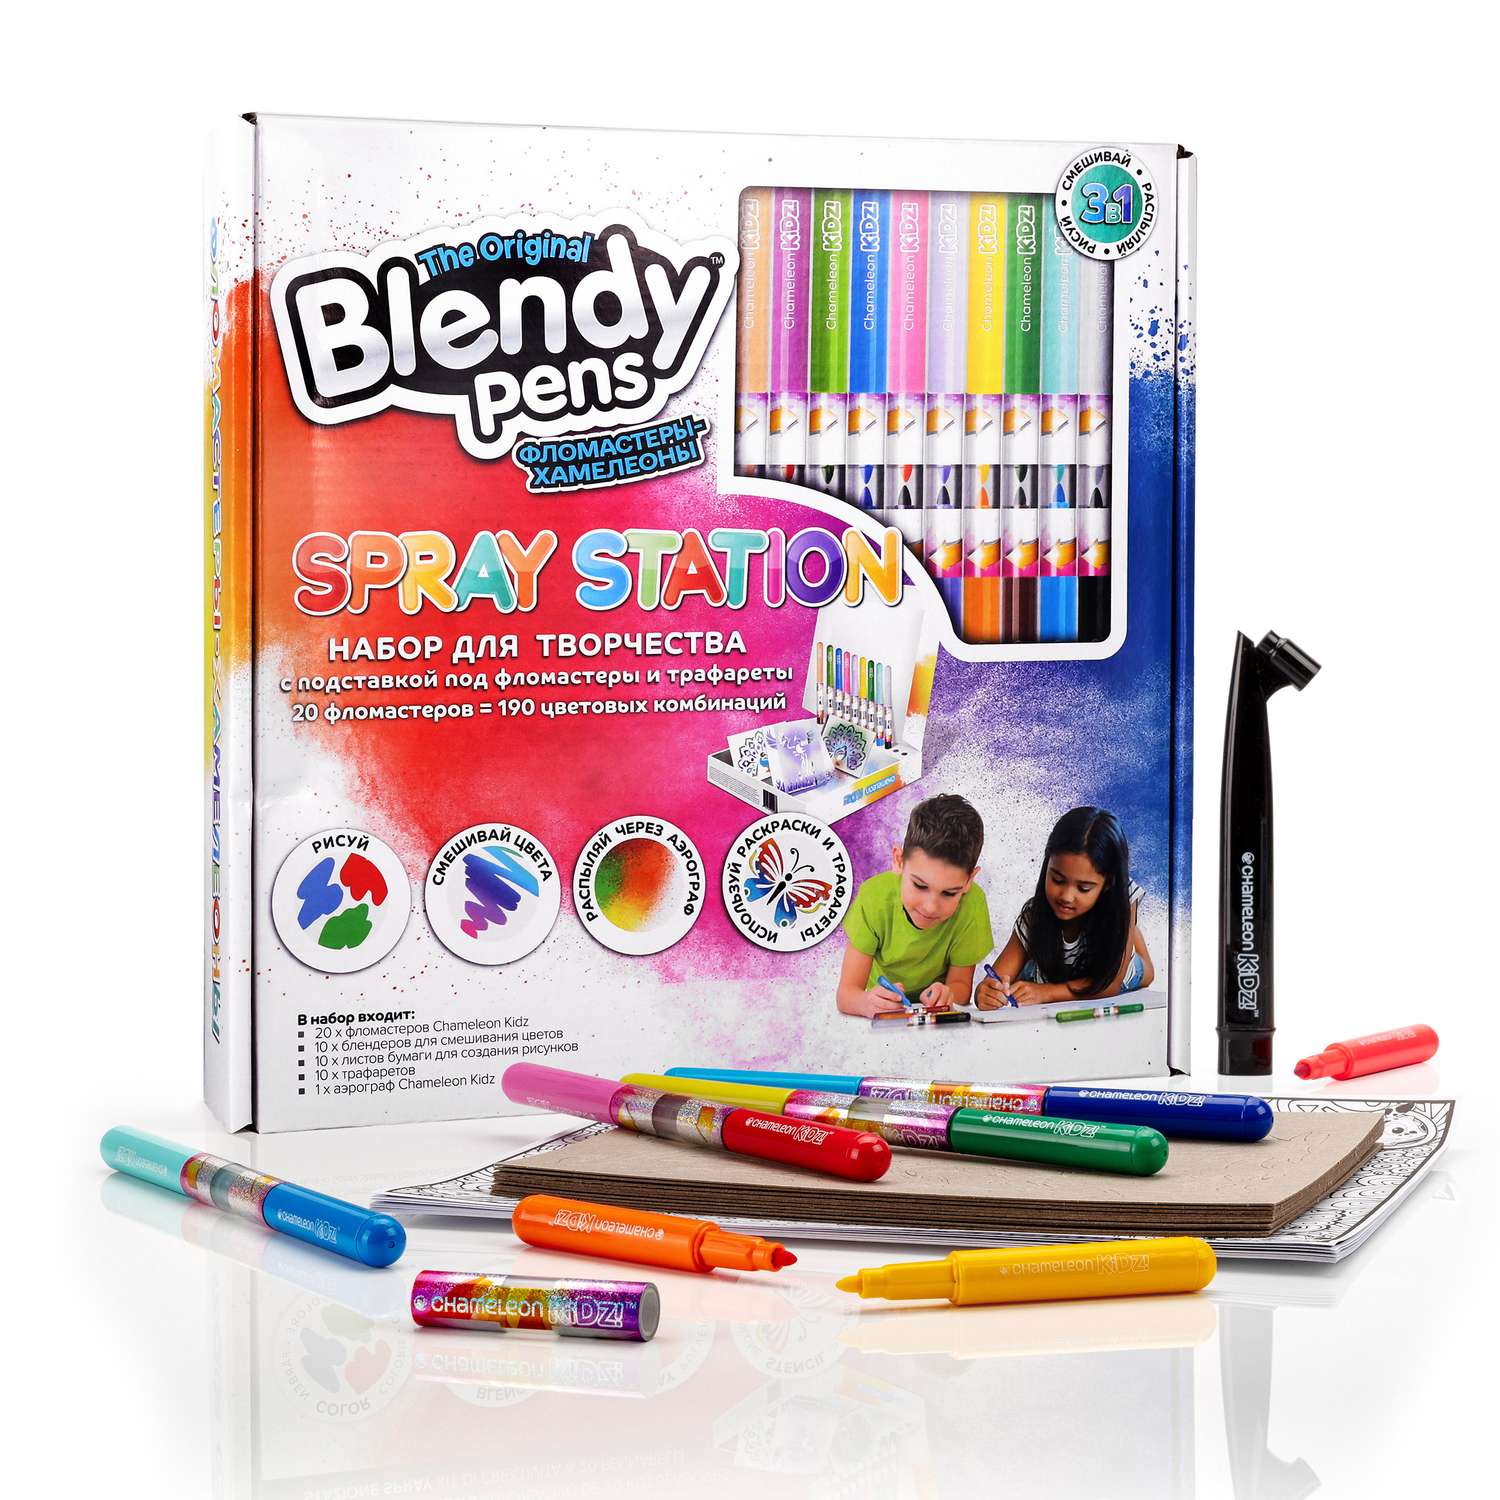 Набор для творчества Blendy pens Фломастеры хамелеоны 20 штук с аэрографом - фото 2